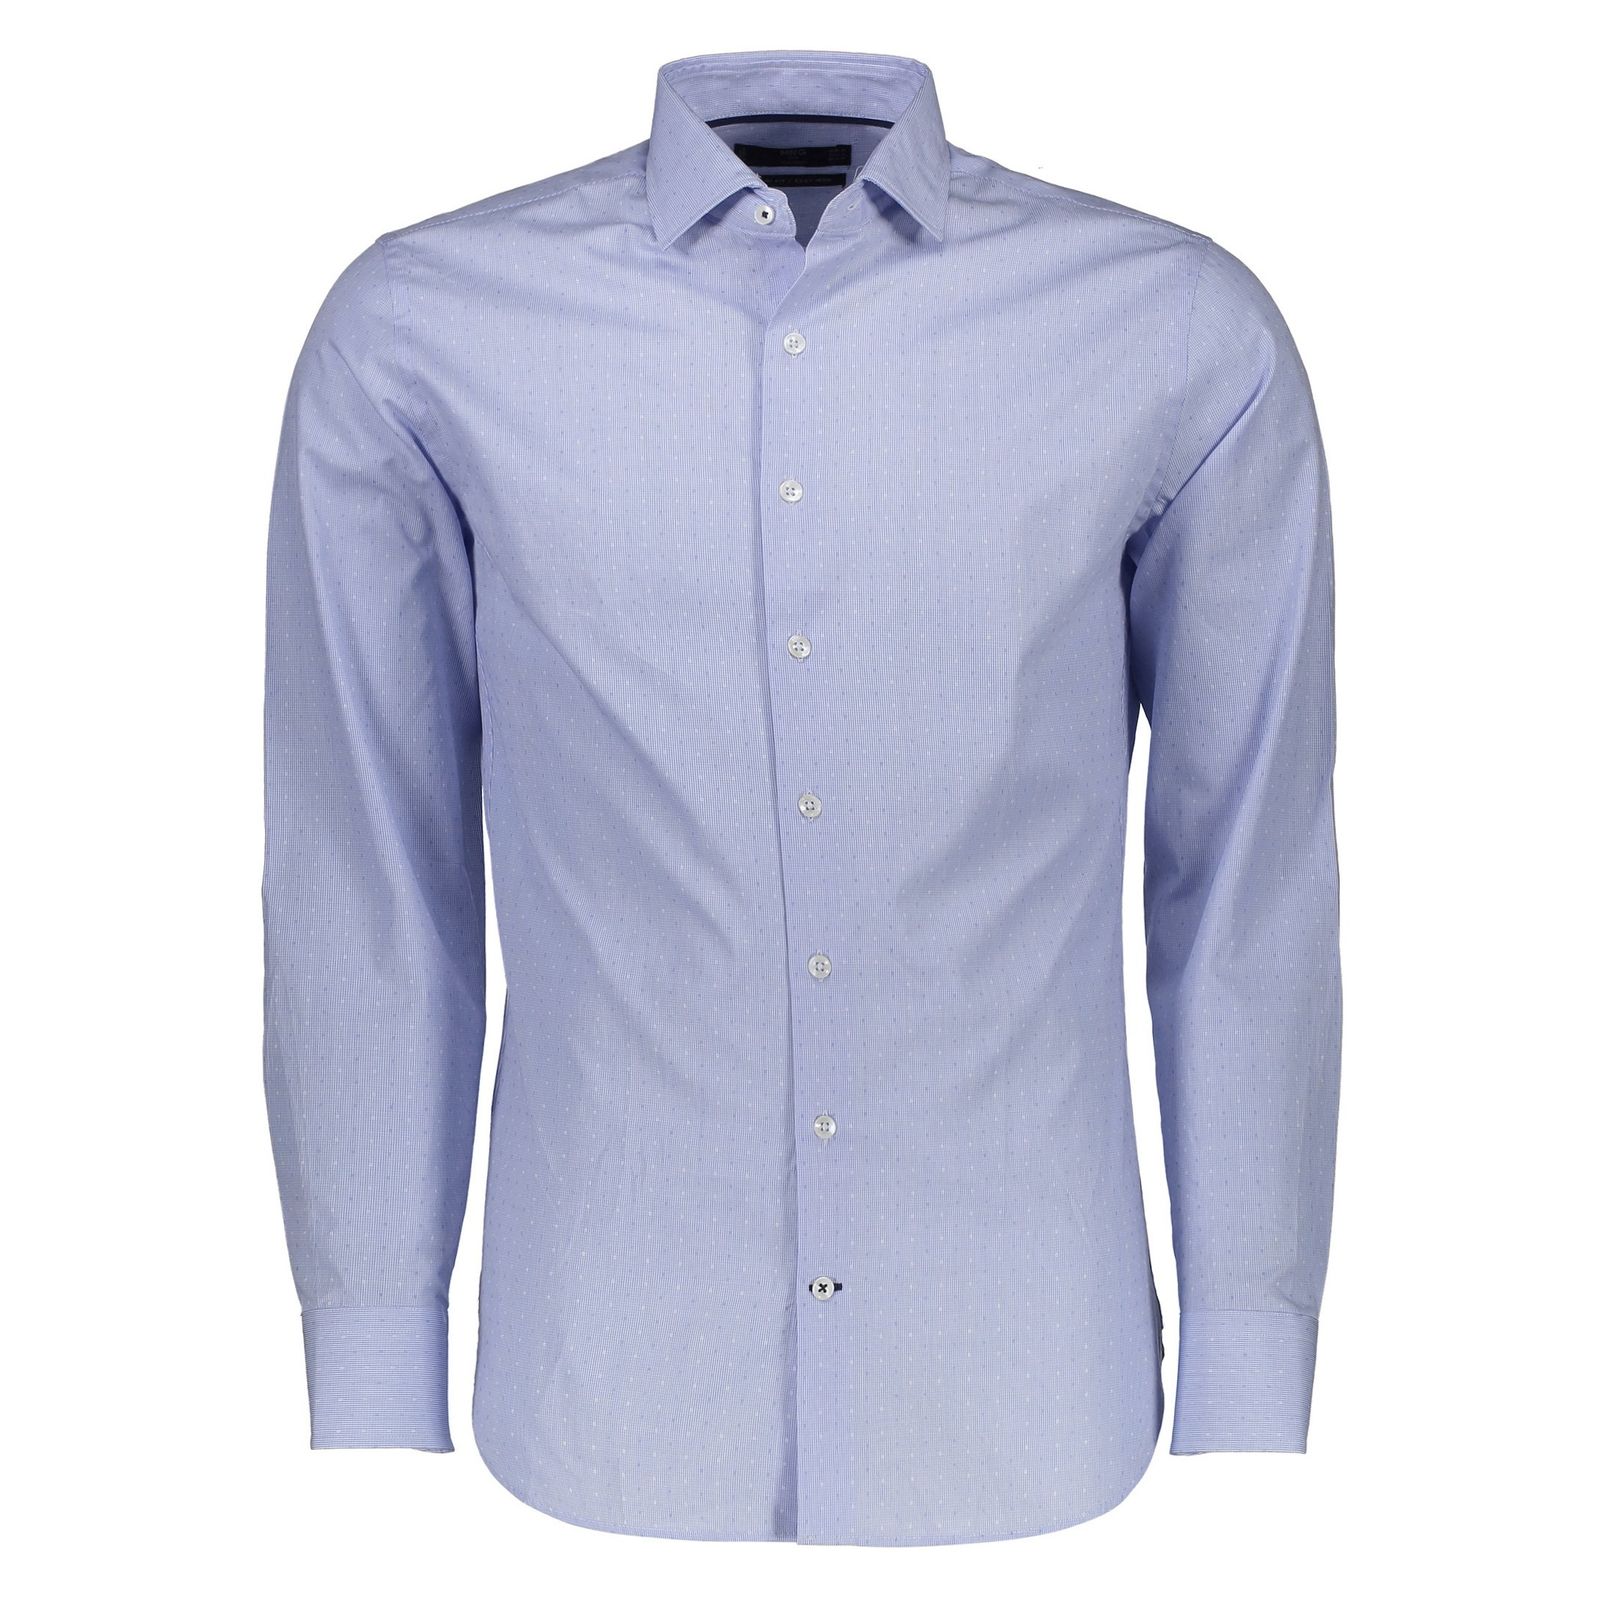 پیراهن رسمی مردانه - مانگو - آبي روشن - 1